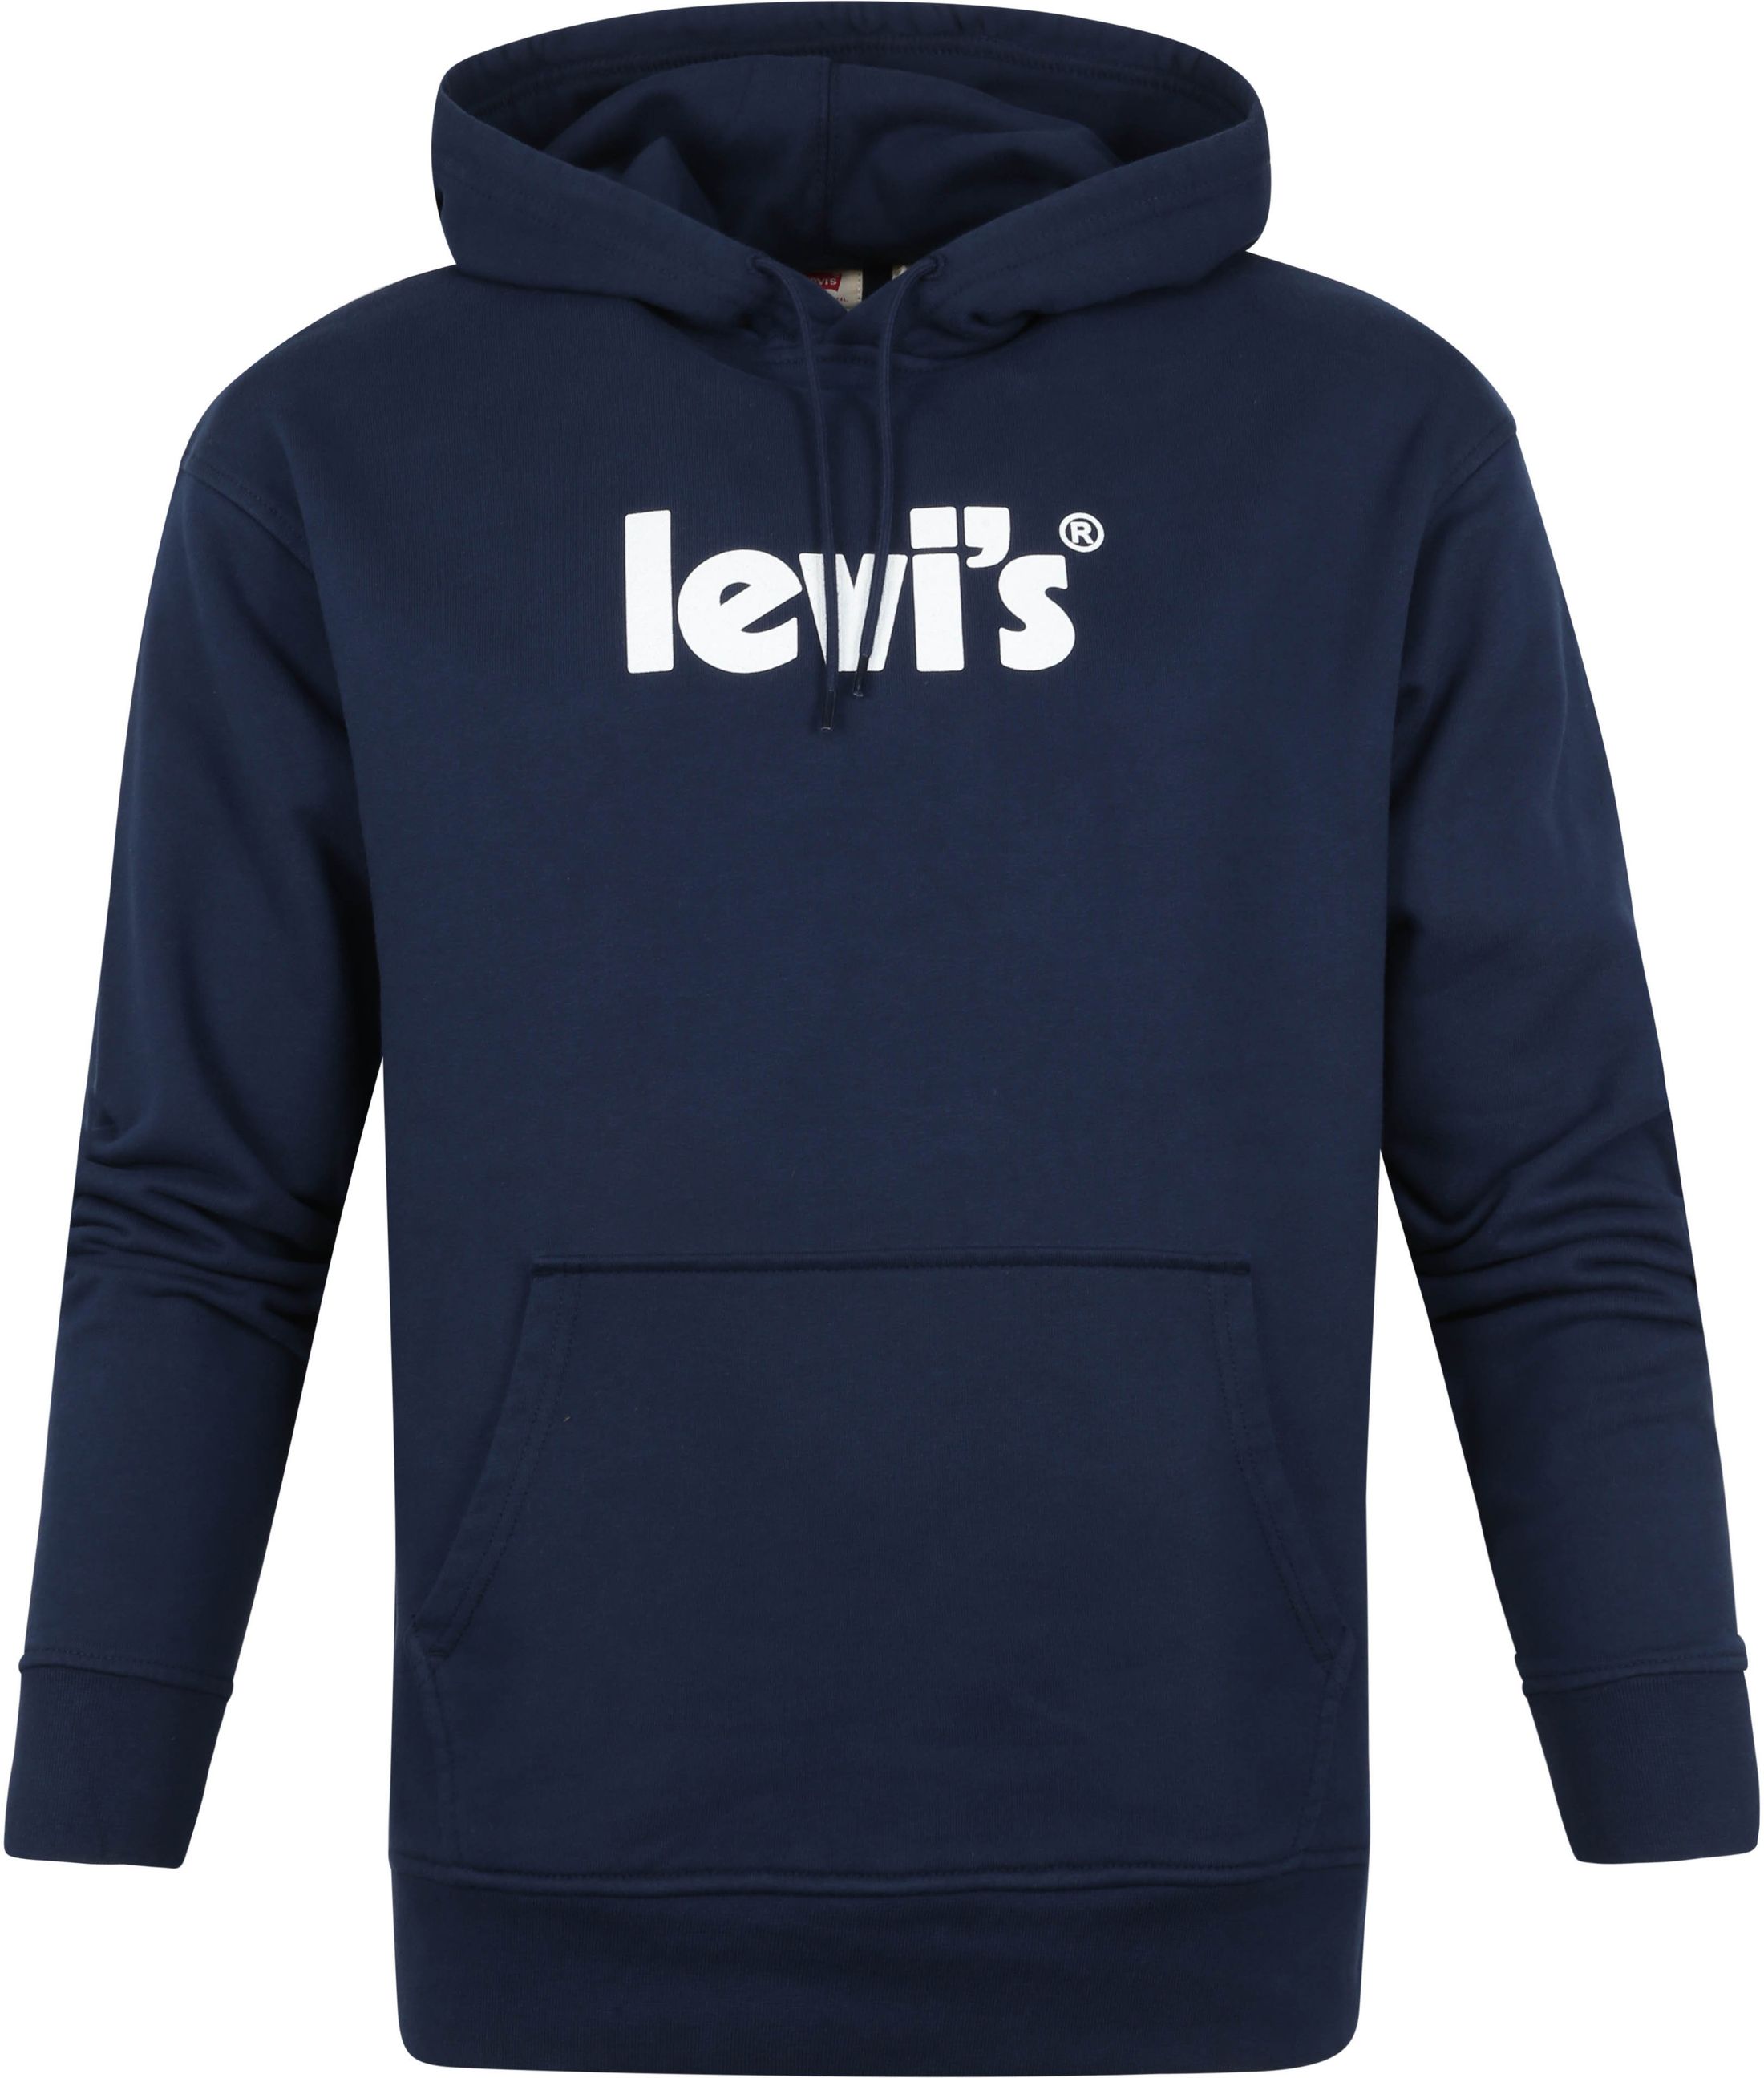 Levi's Graphic Core Hoodie Navy Dark Blue size L